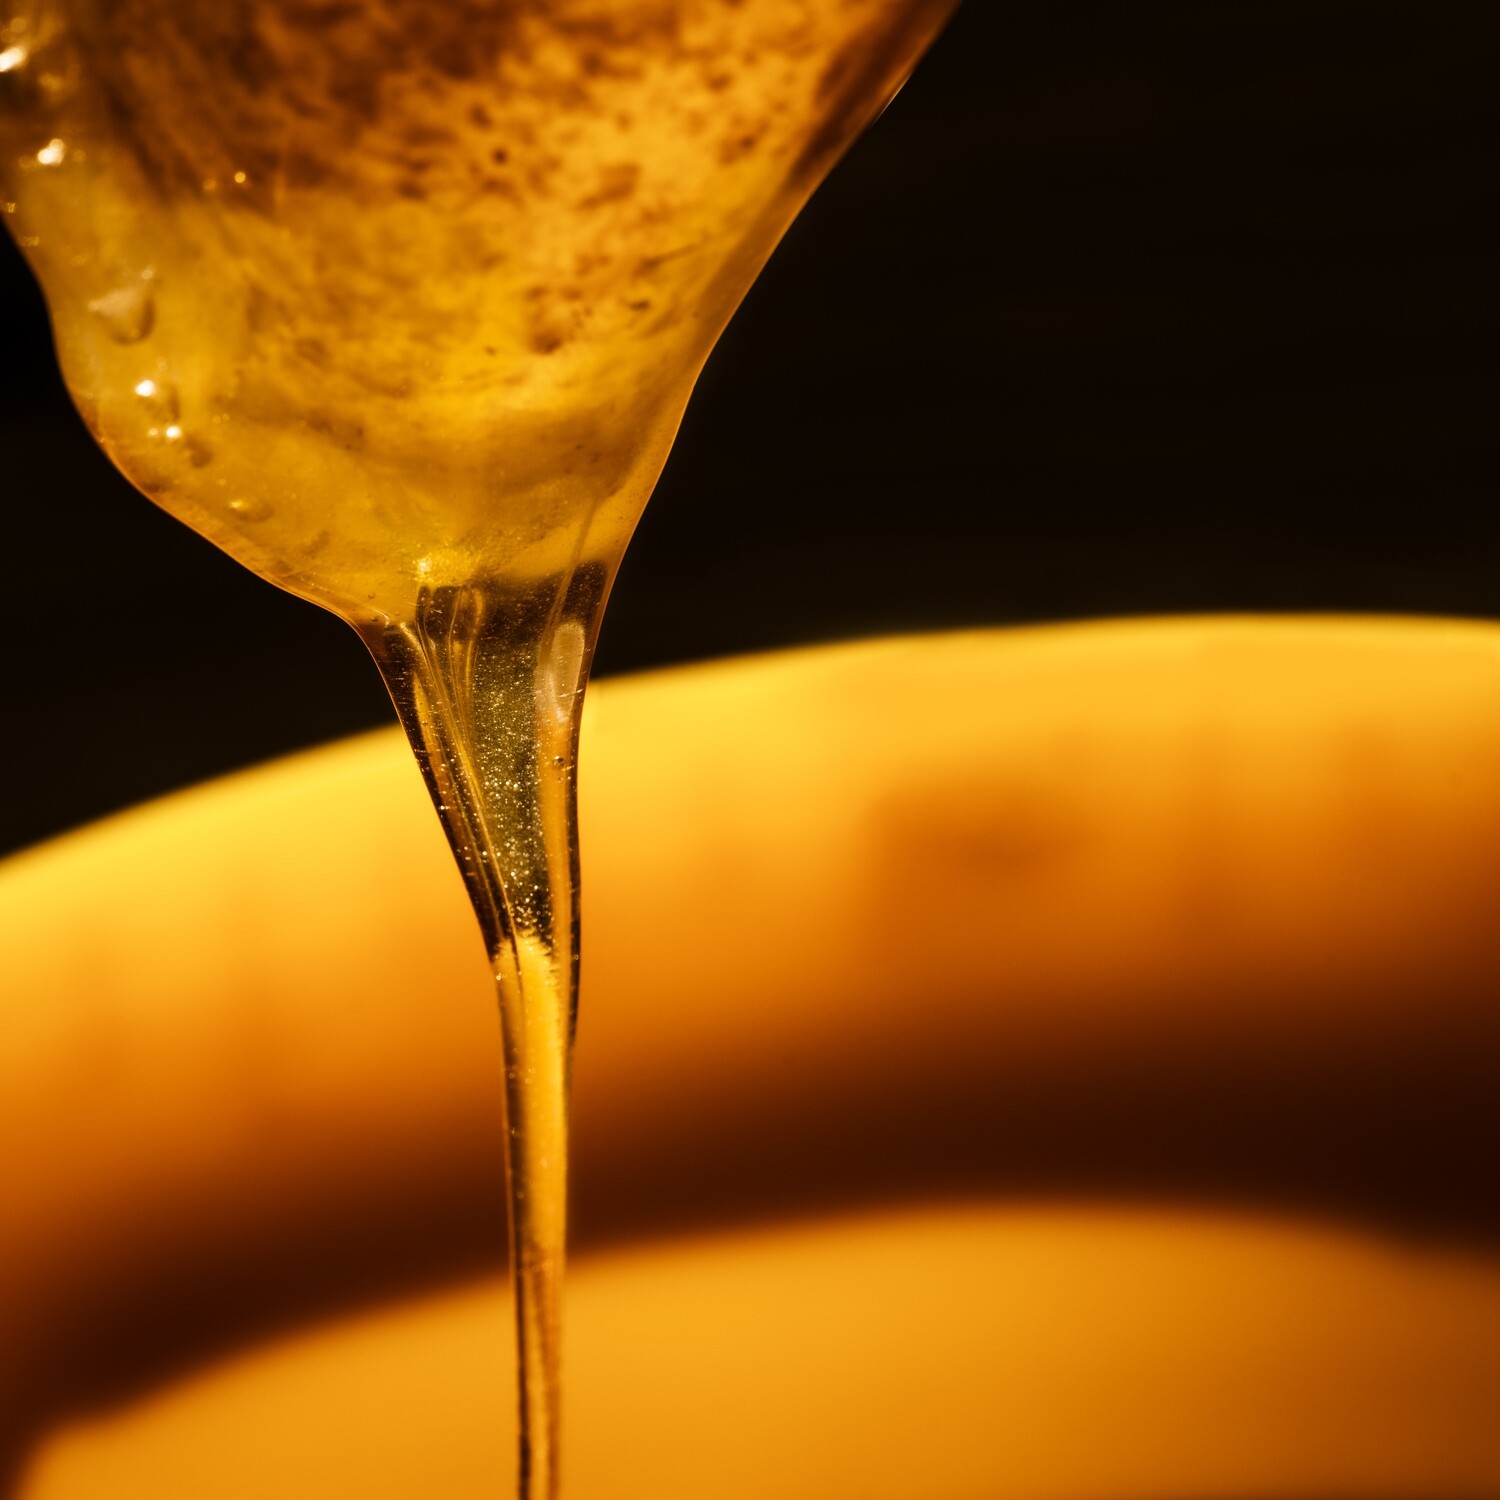 Süßes Gold - Druck auf Leinwand 
60x60 cm